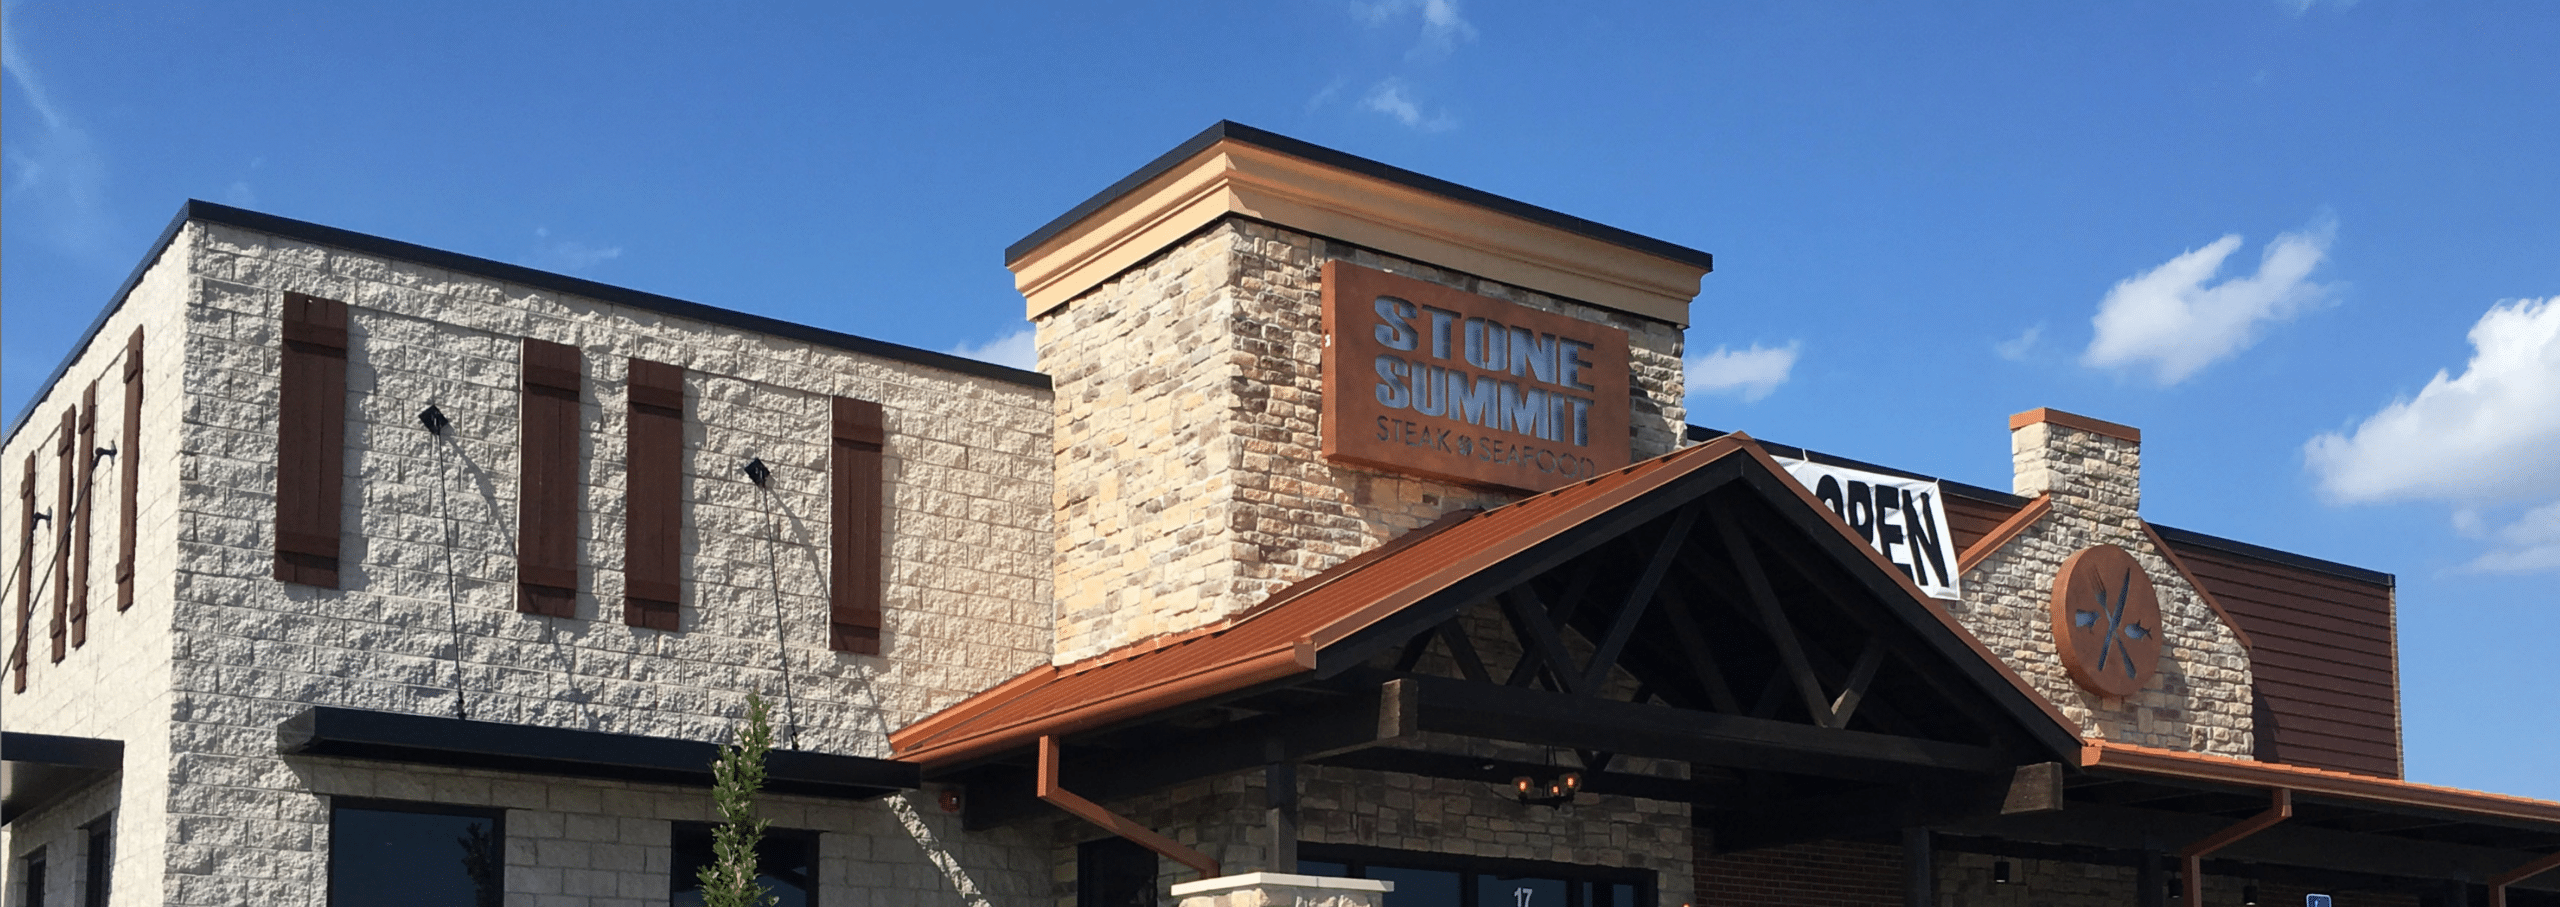 Stone Summit Steak and Seafood Restaurant